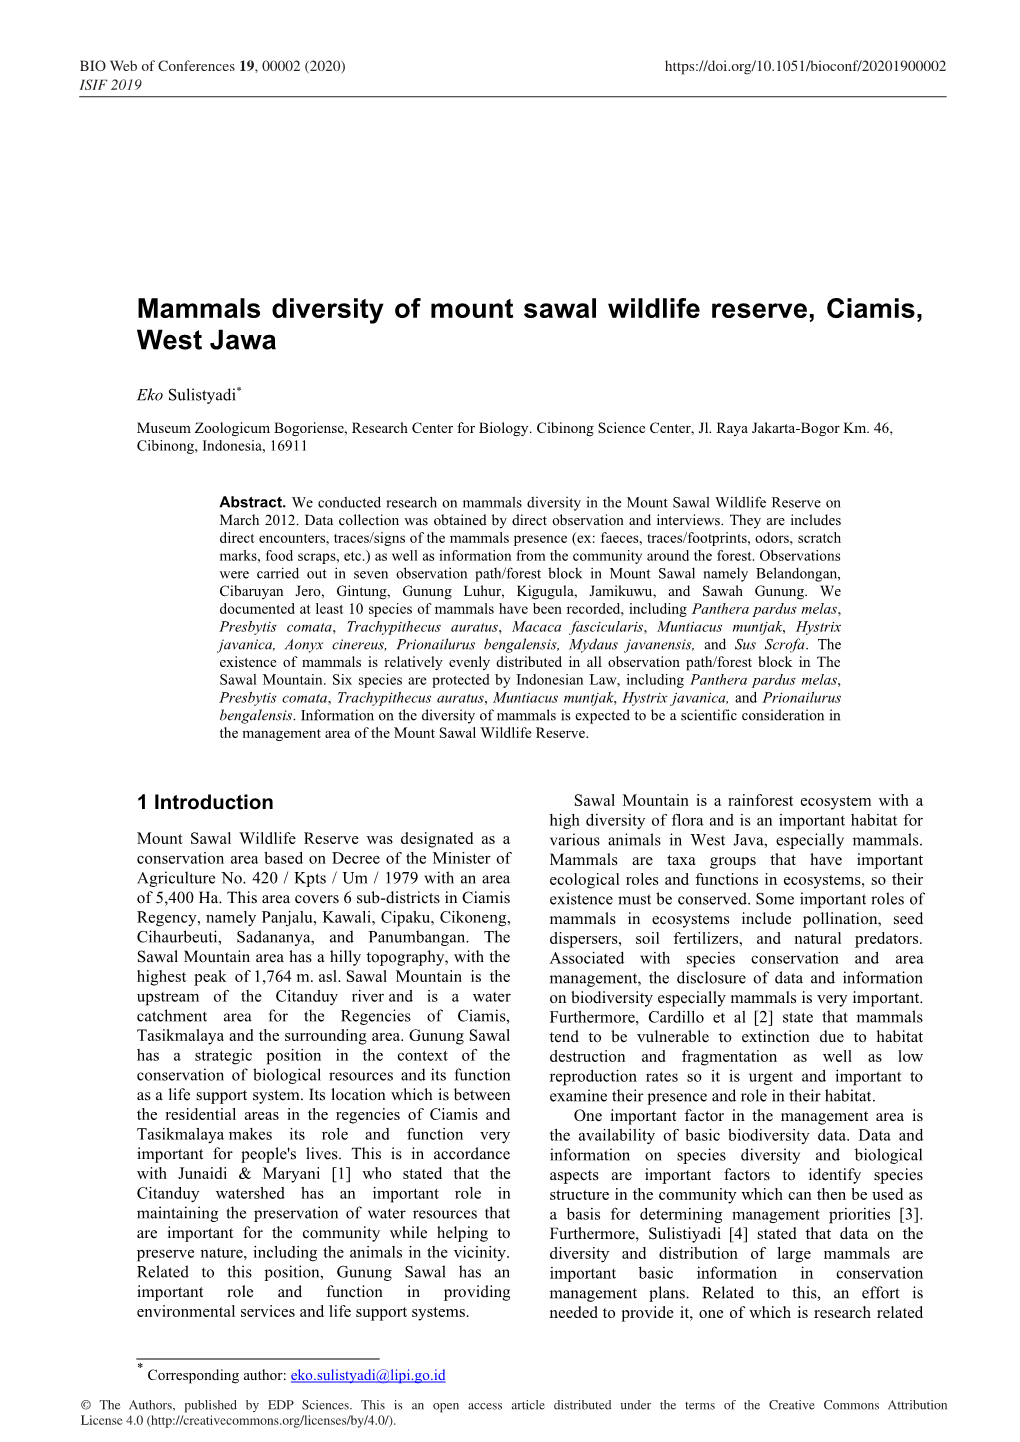 Mammals Diversity of Mount Sawal Wildlife Reserve, Ciamis, West Jawa